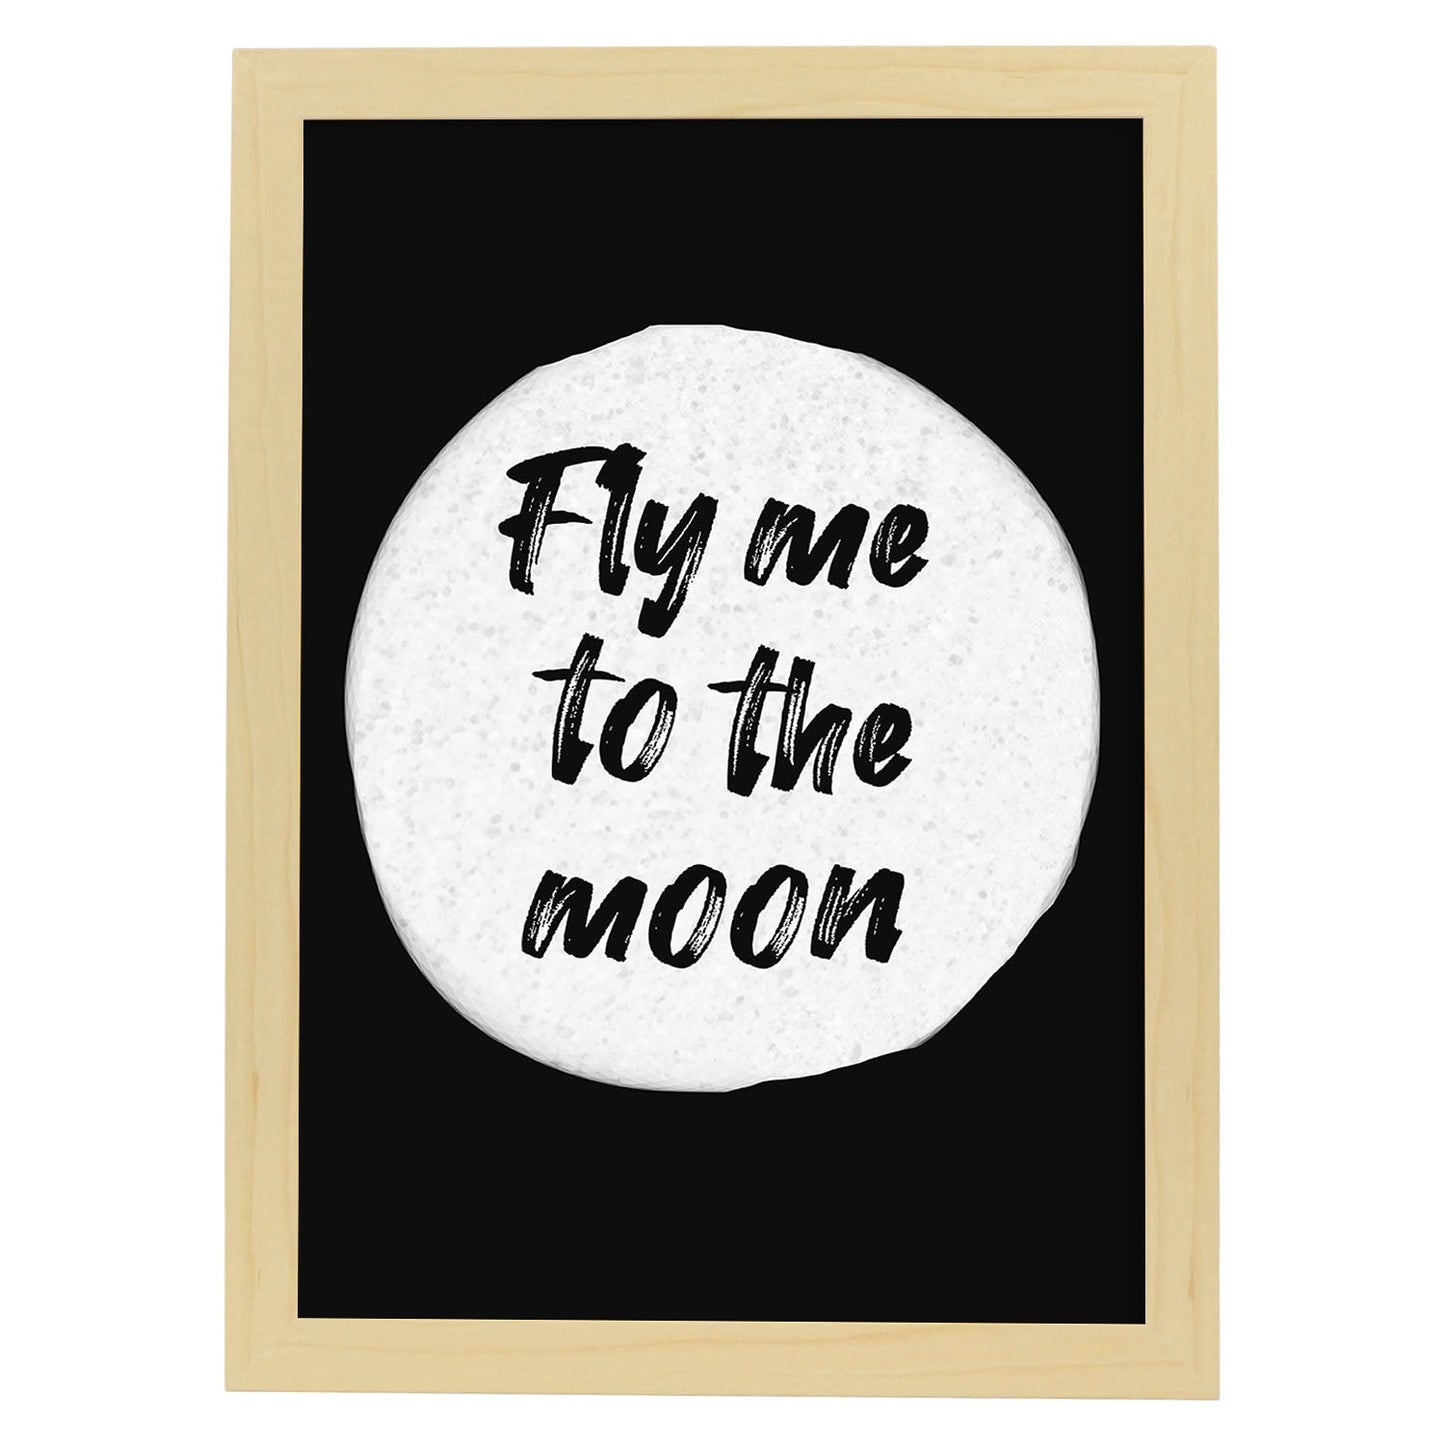 Lamina artistica decorativa con ilustración de fly me to the moon estilo Mensaje inspiracional-Artwork-Nacnic-A3-Marco Madera clara-Nacnic Estudio SL